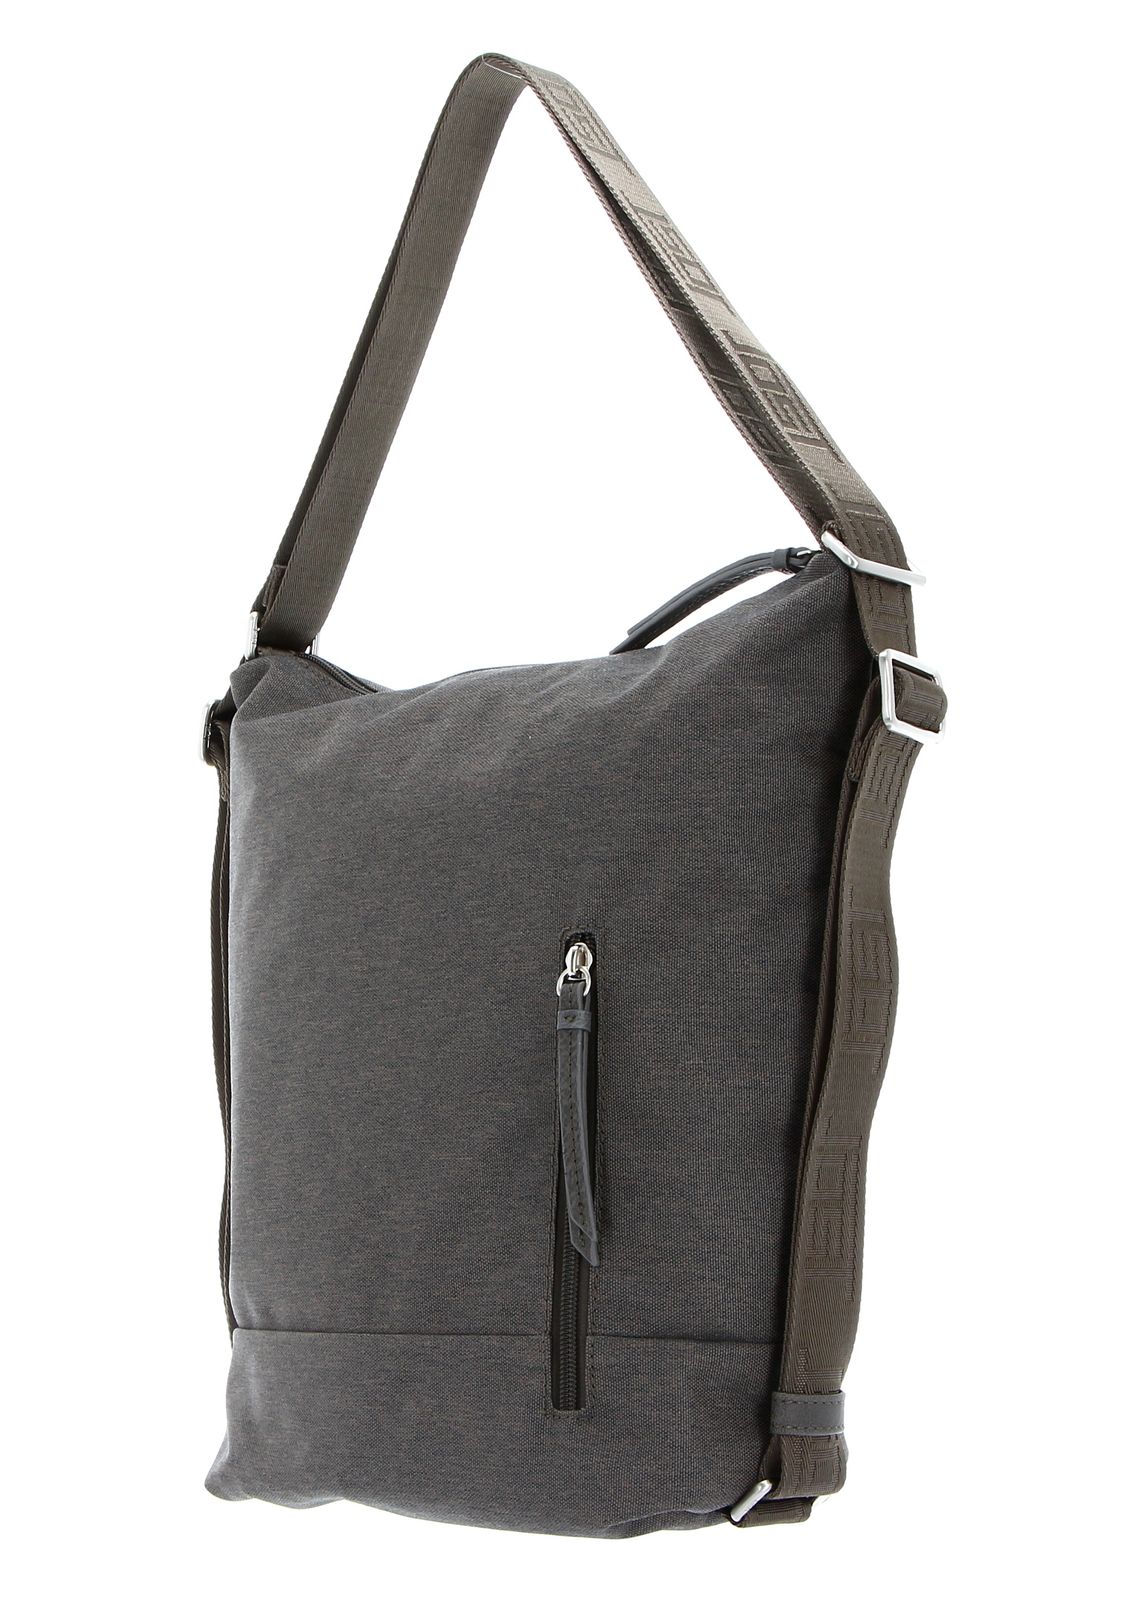 JOST backpack Bergen 3-Way-Bag Taupe | Buy bags, purses & accessories ...